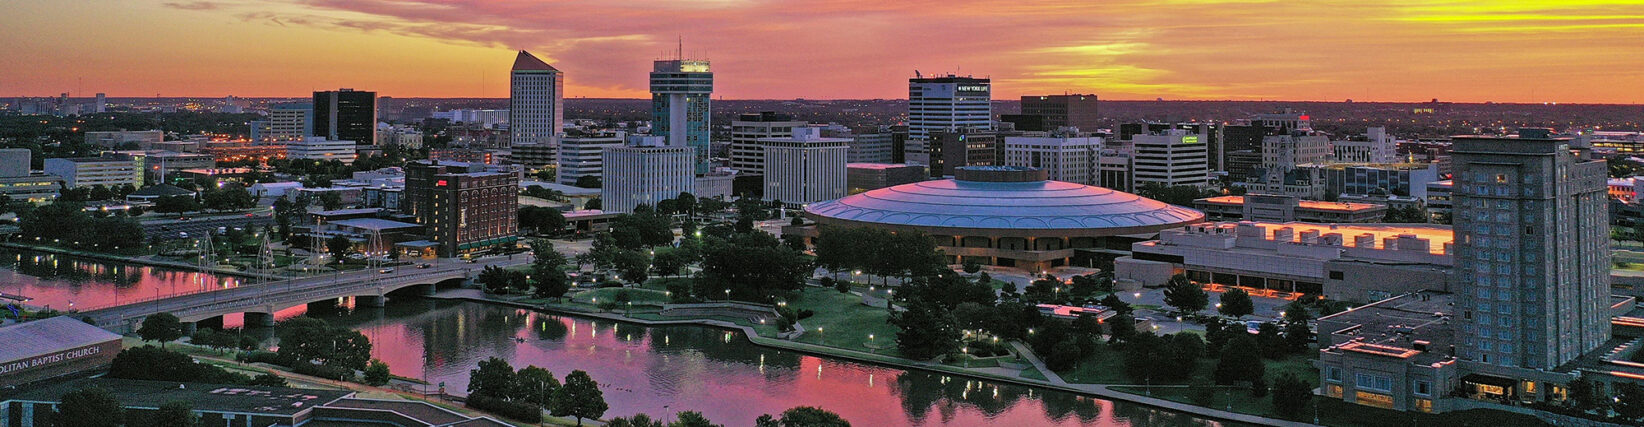 Wichita city skyline